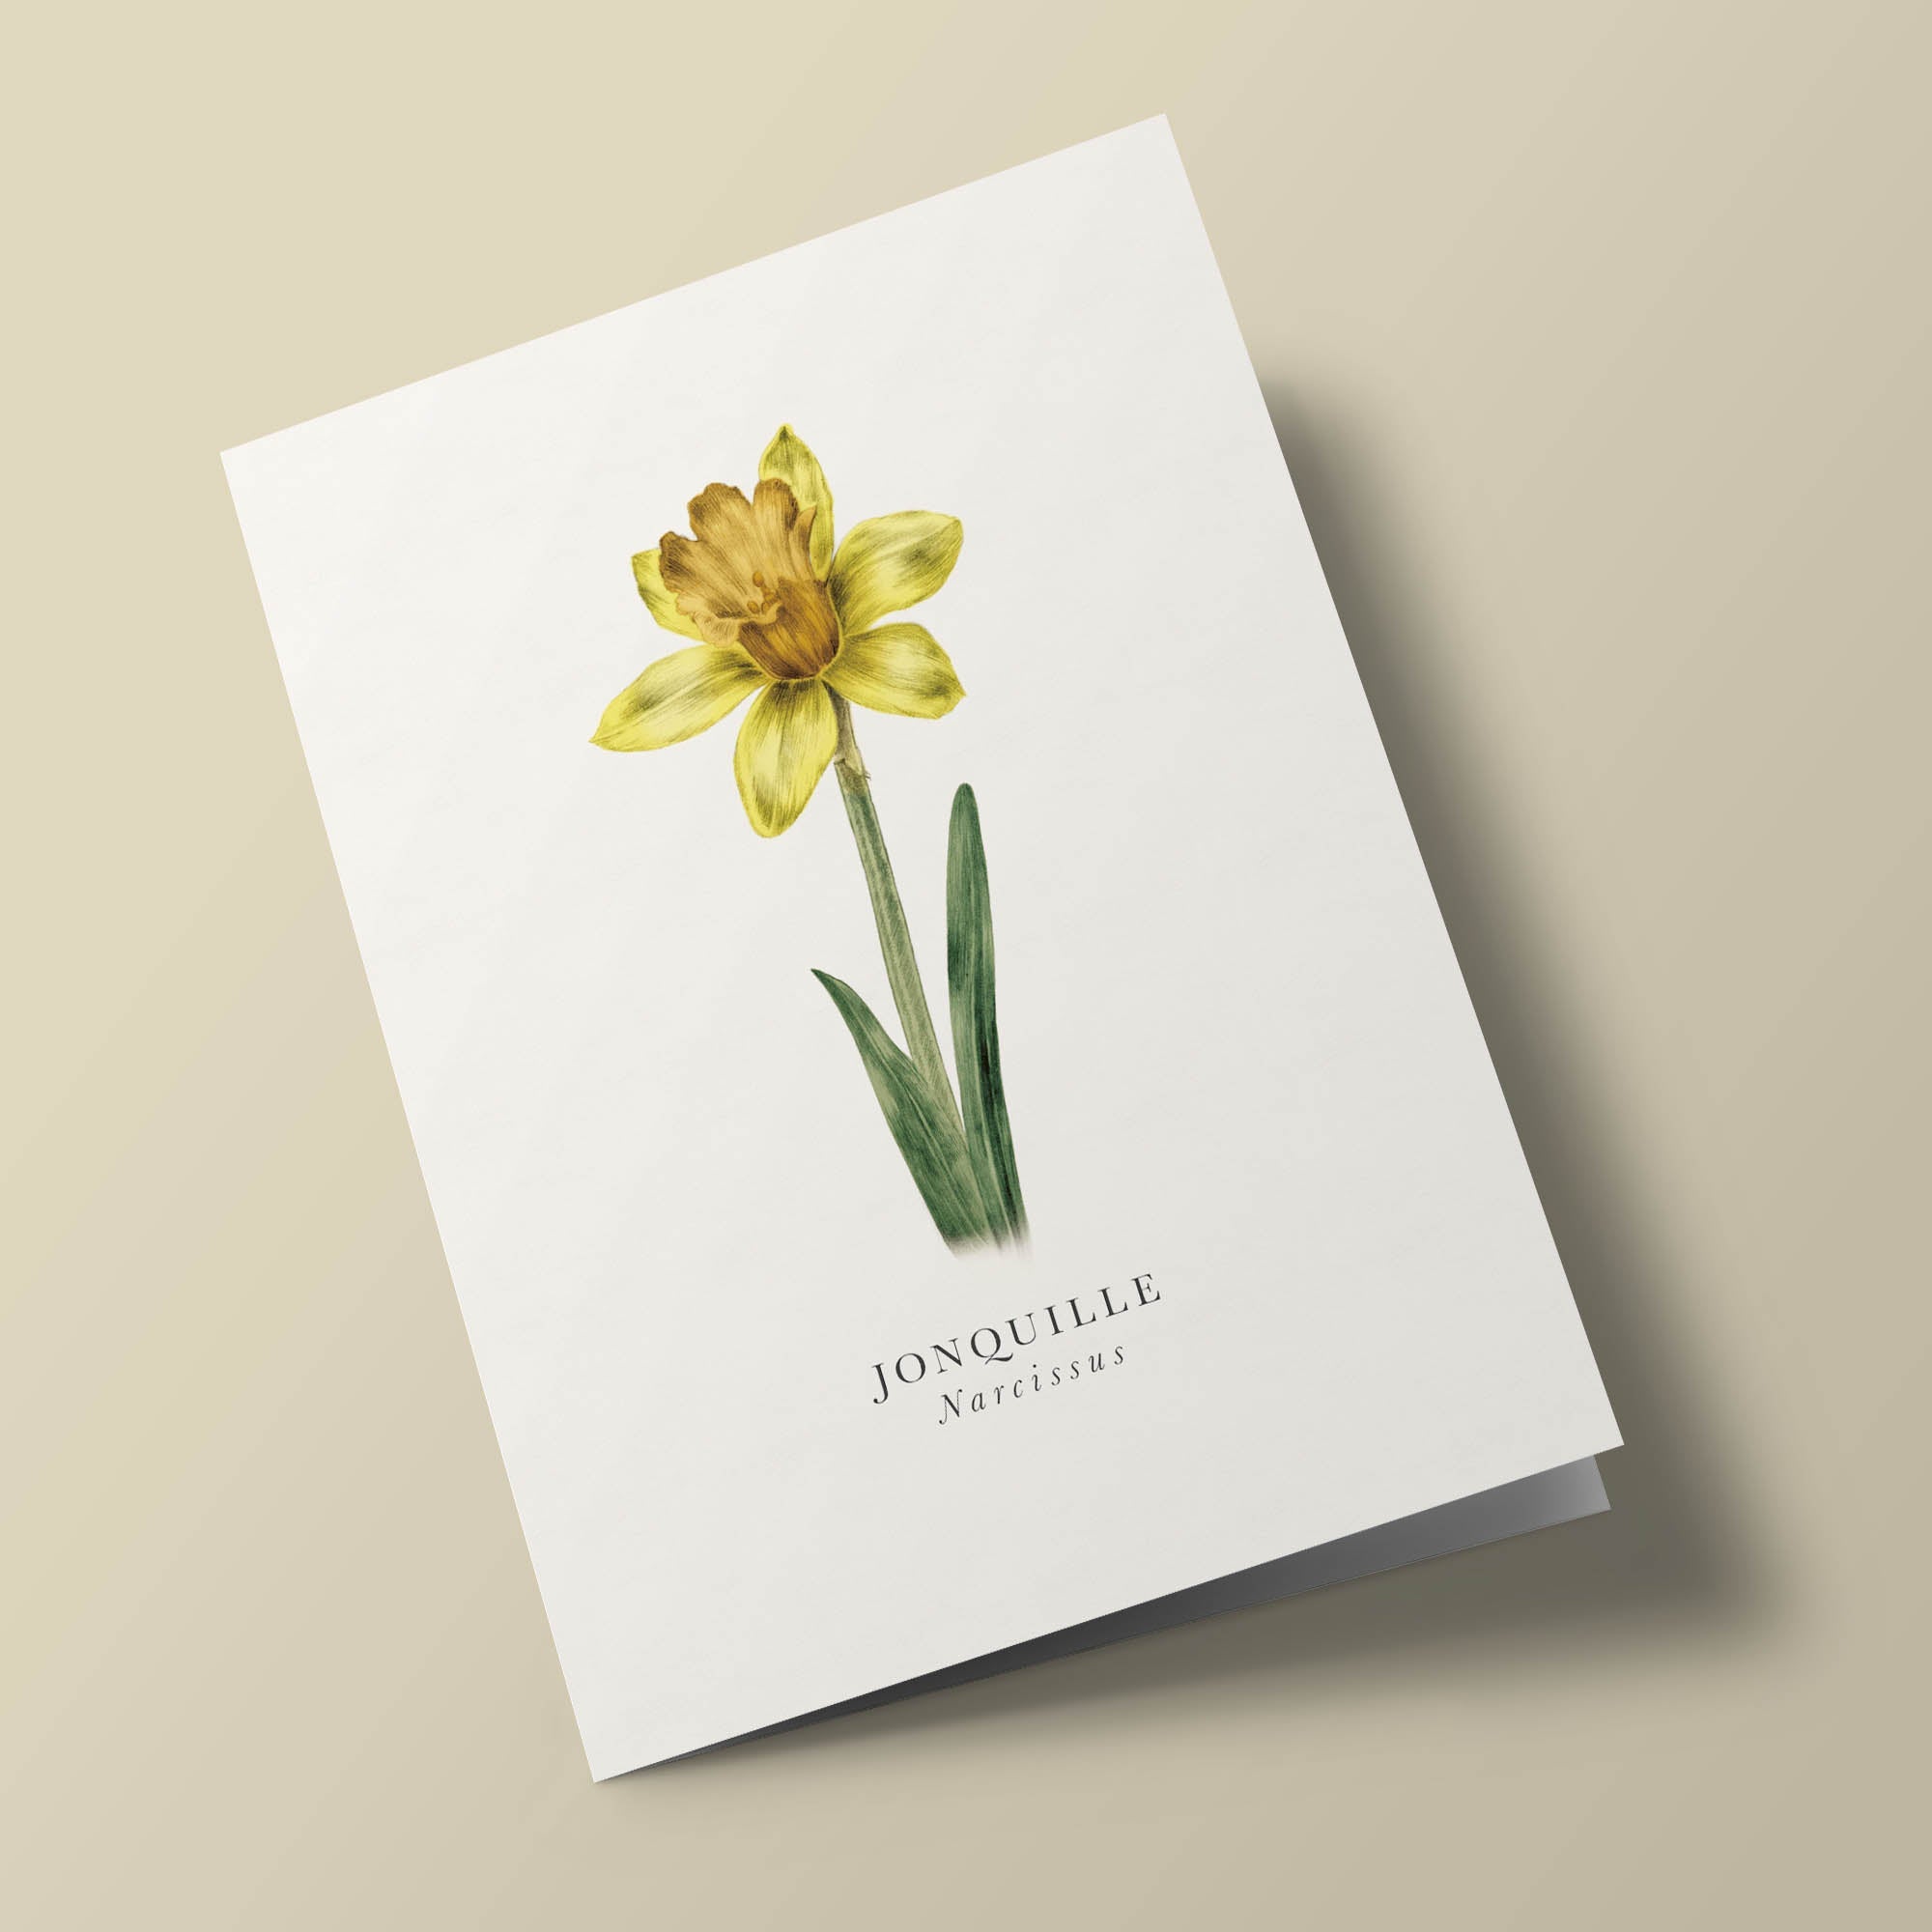 Book and botanics - Daffodil